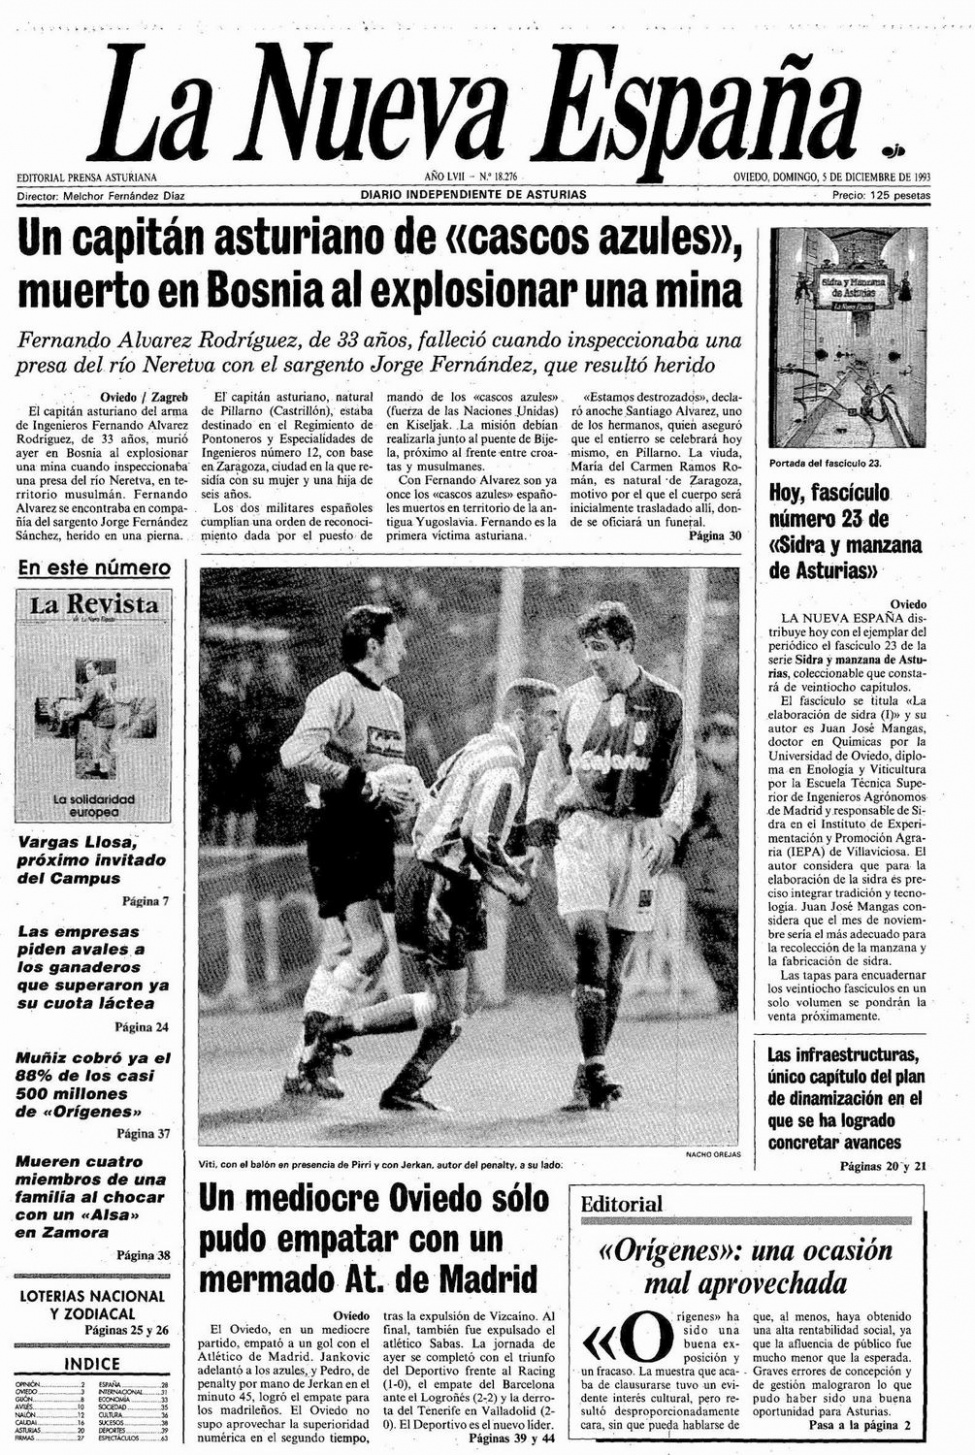 Portada del Domingo, 5 de Diciembre de 1993